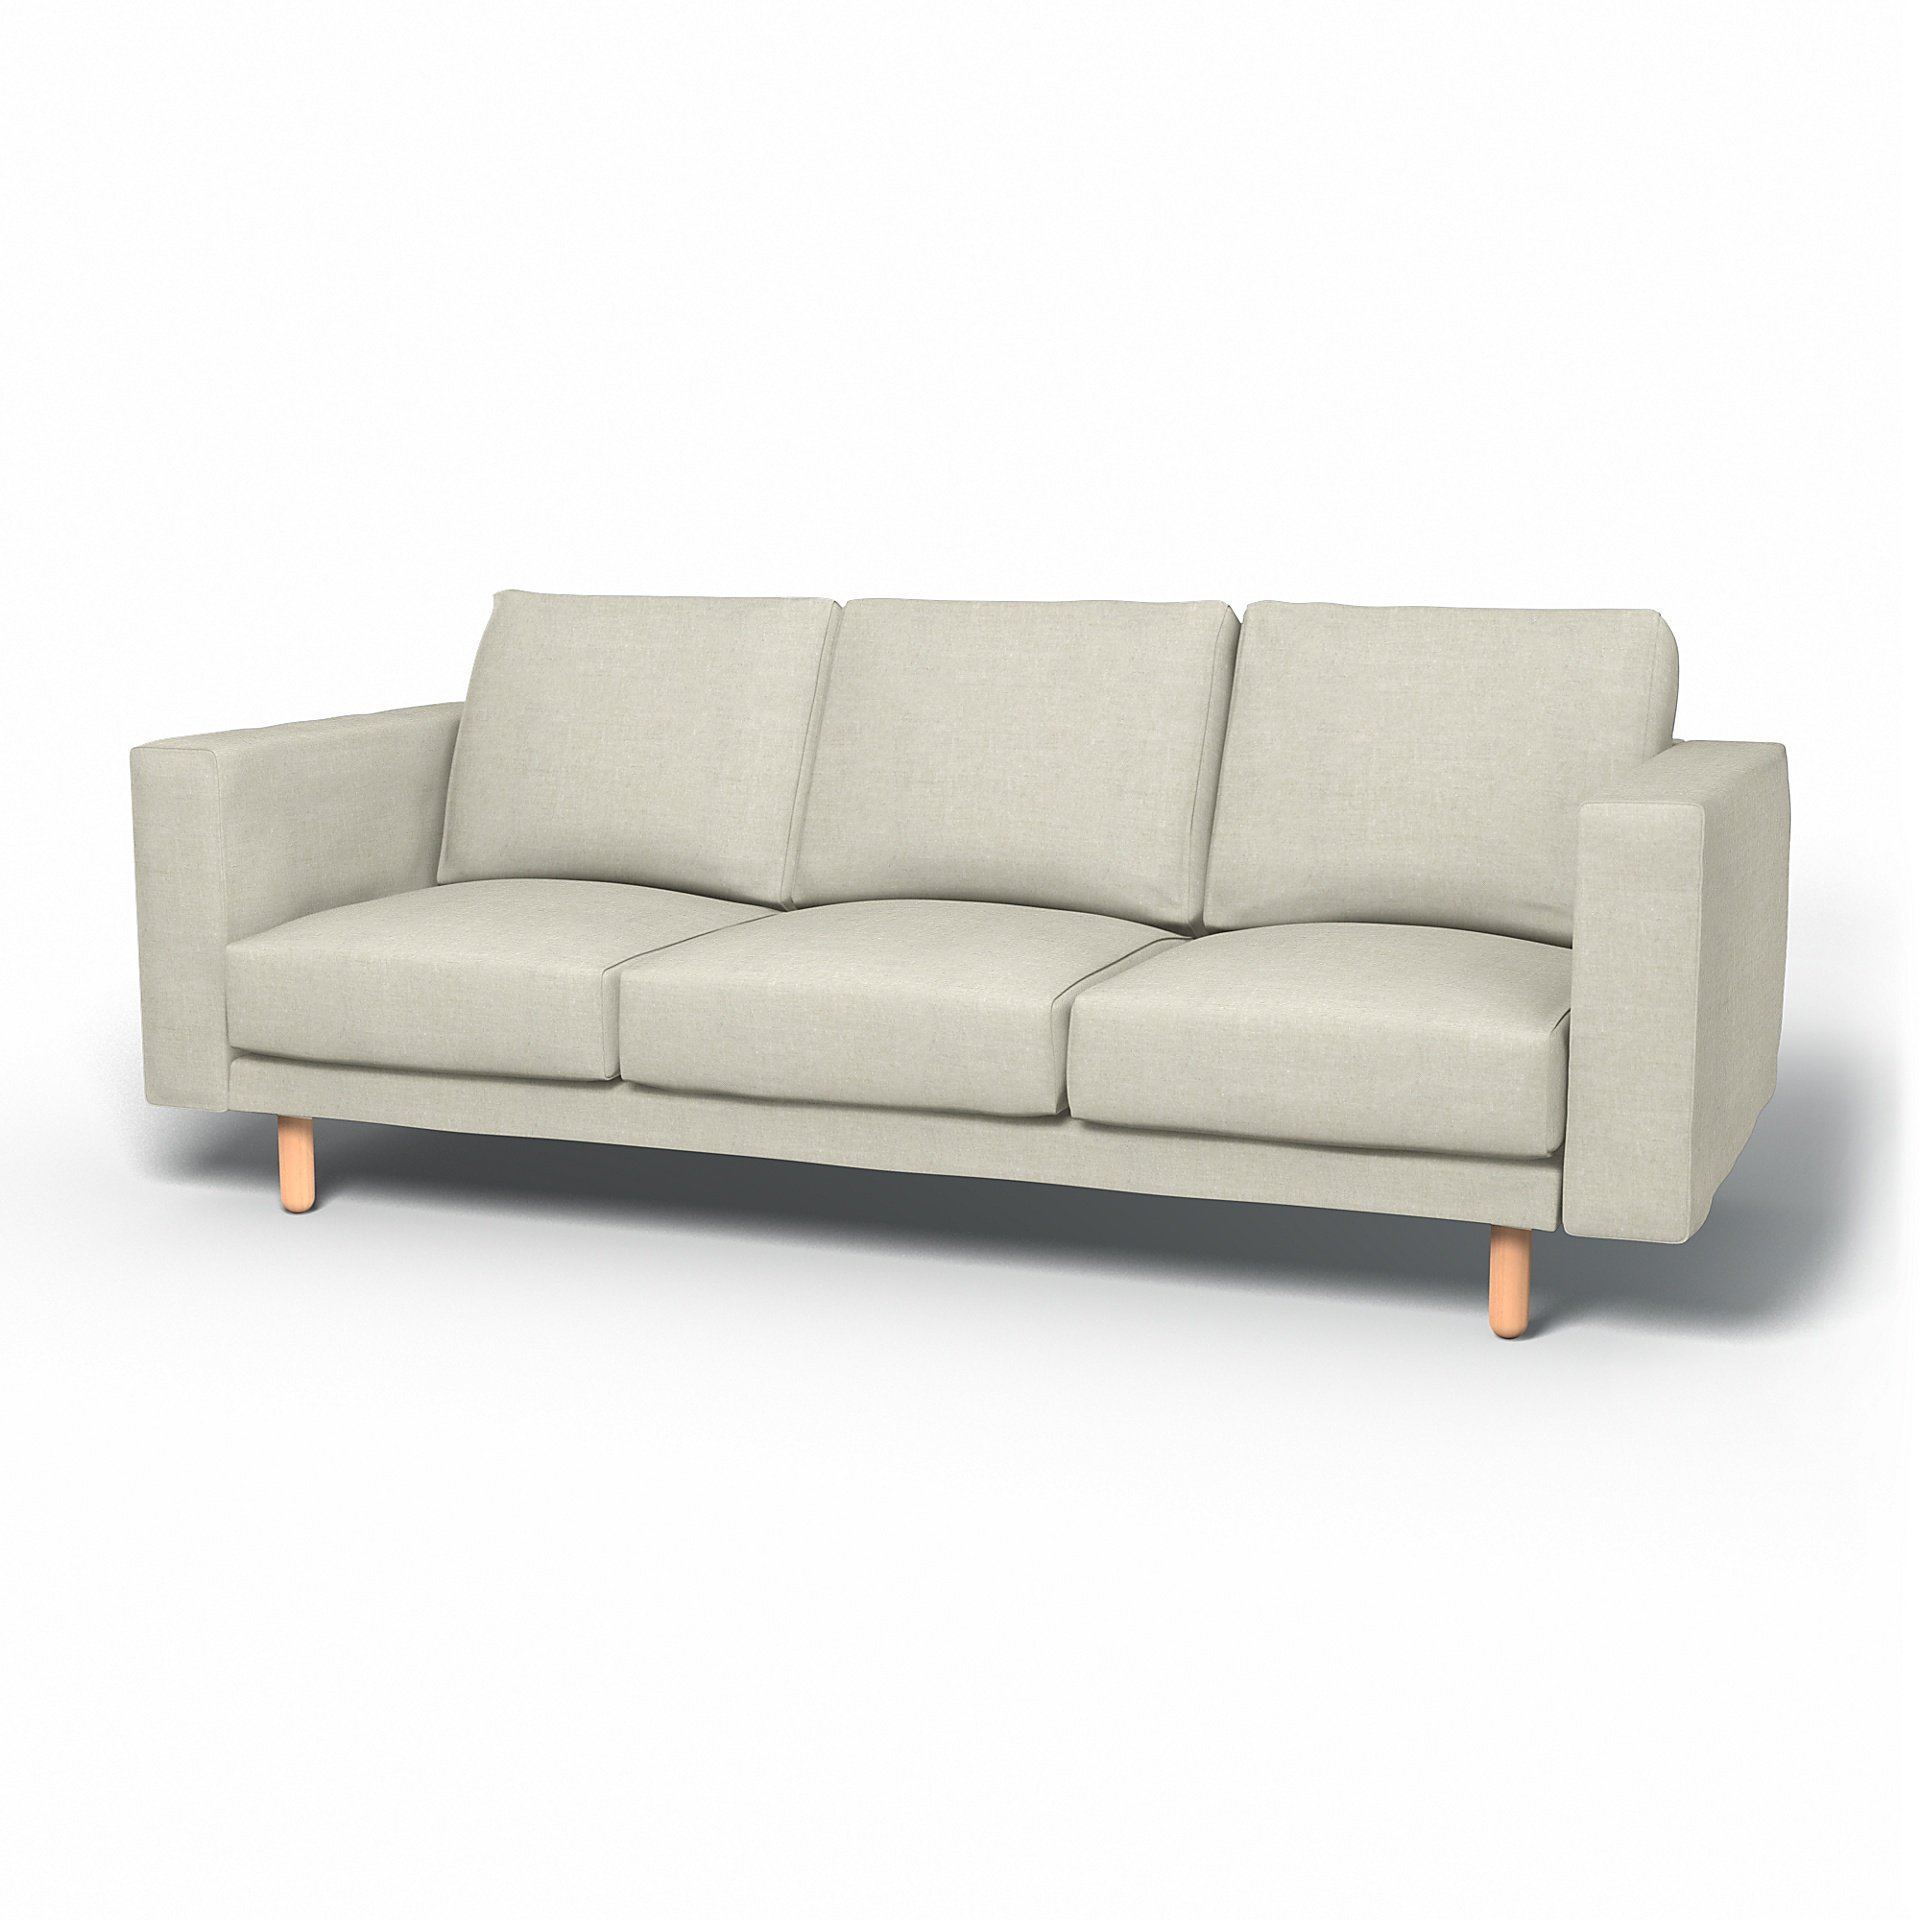 IKEA - Norsborg 3 Seater Sofa Cover, Natural, Linen - Bemz